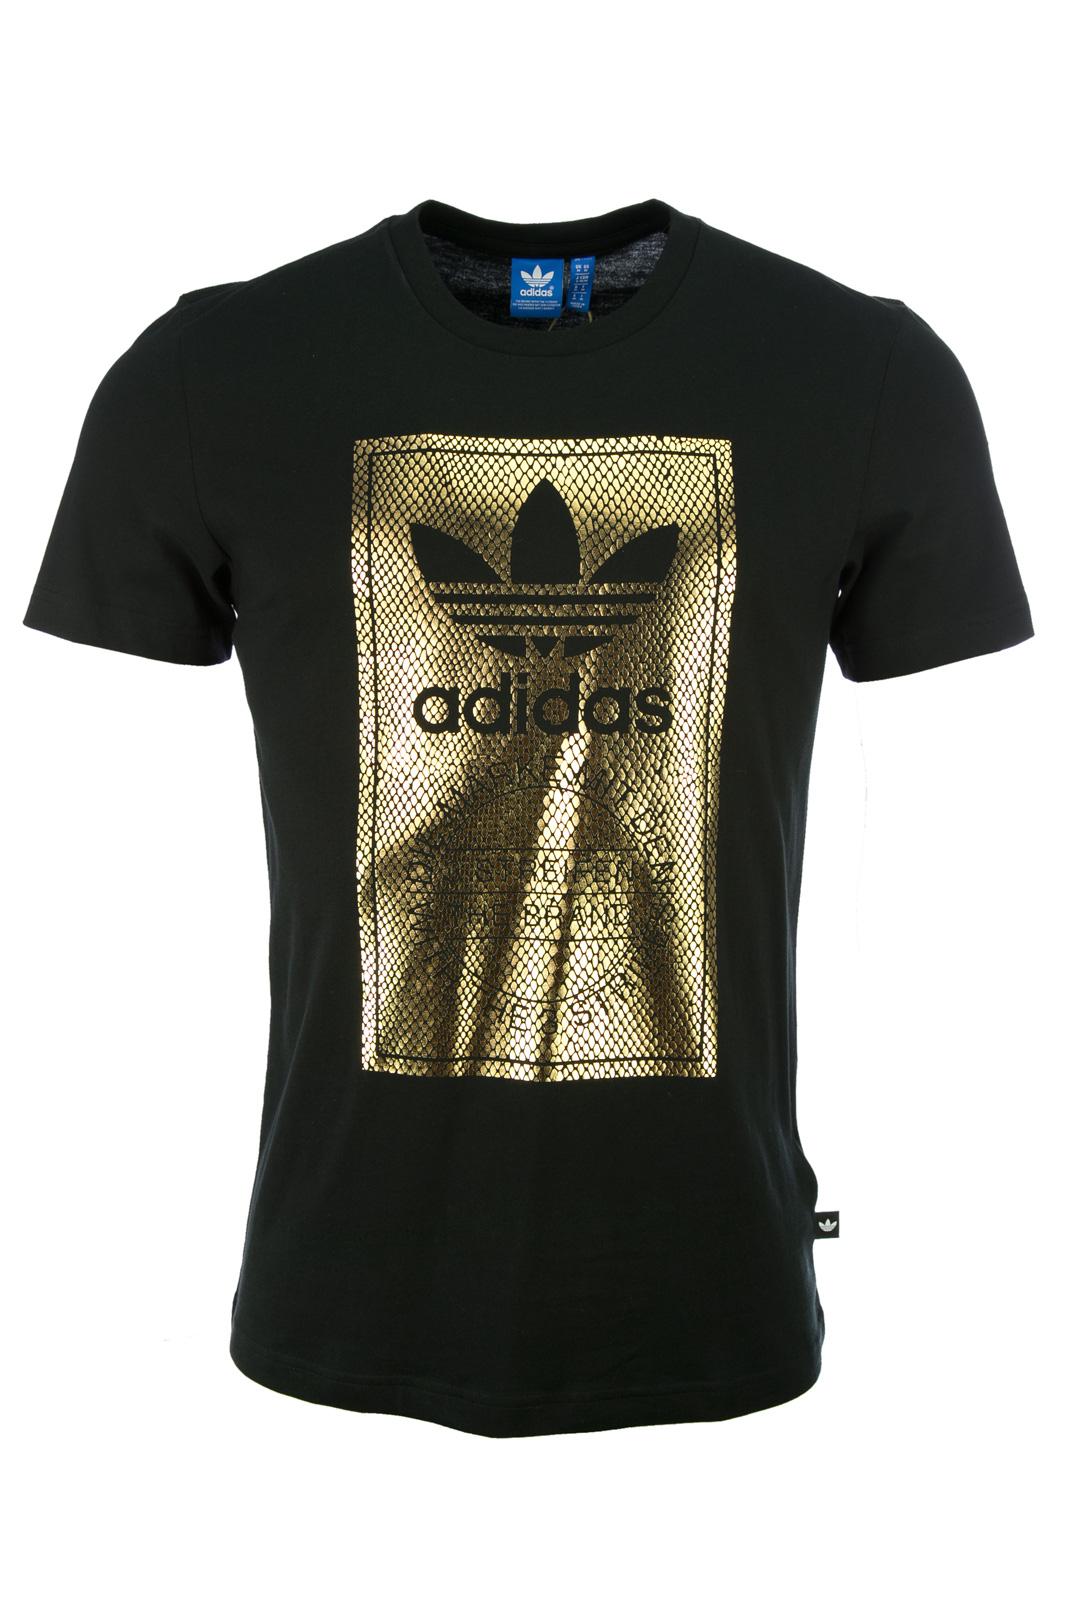 adidas shirt gold logo